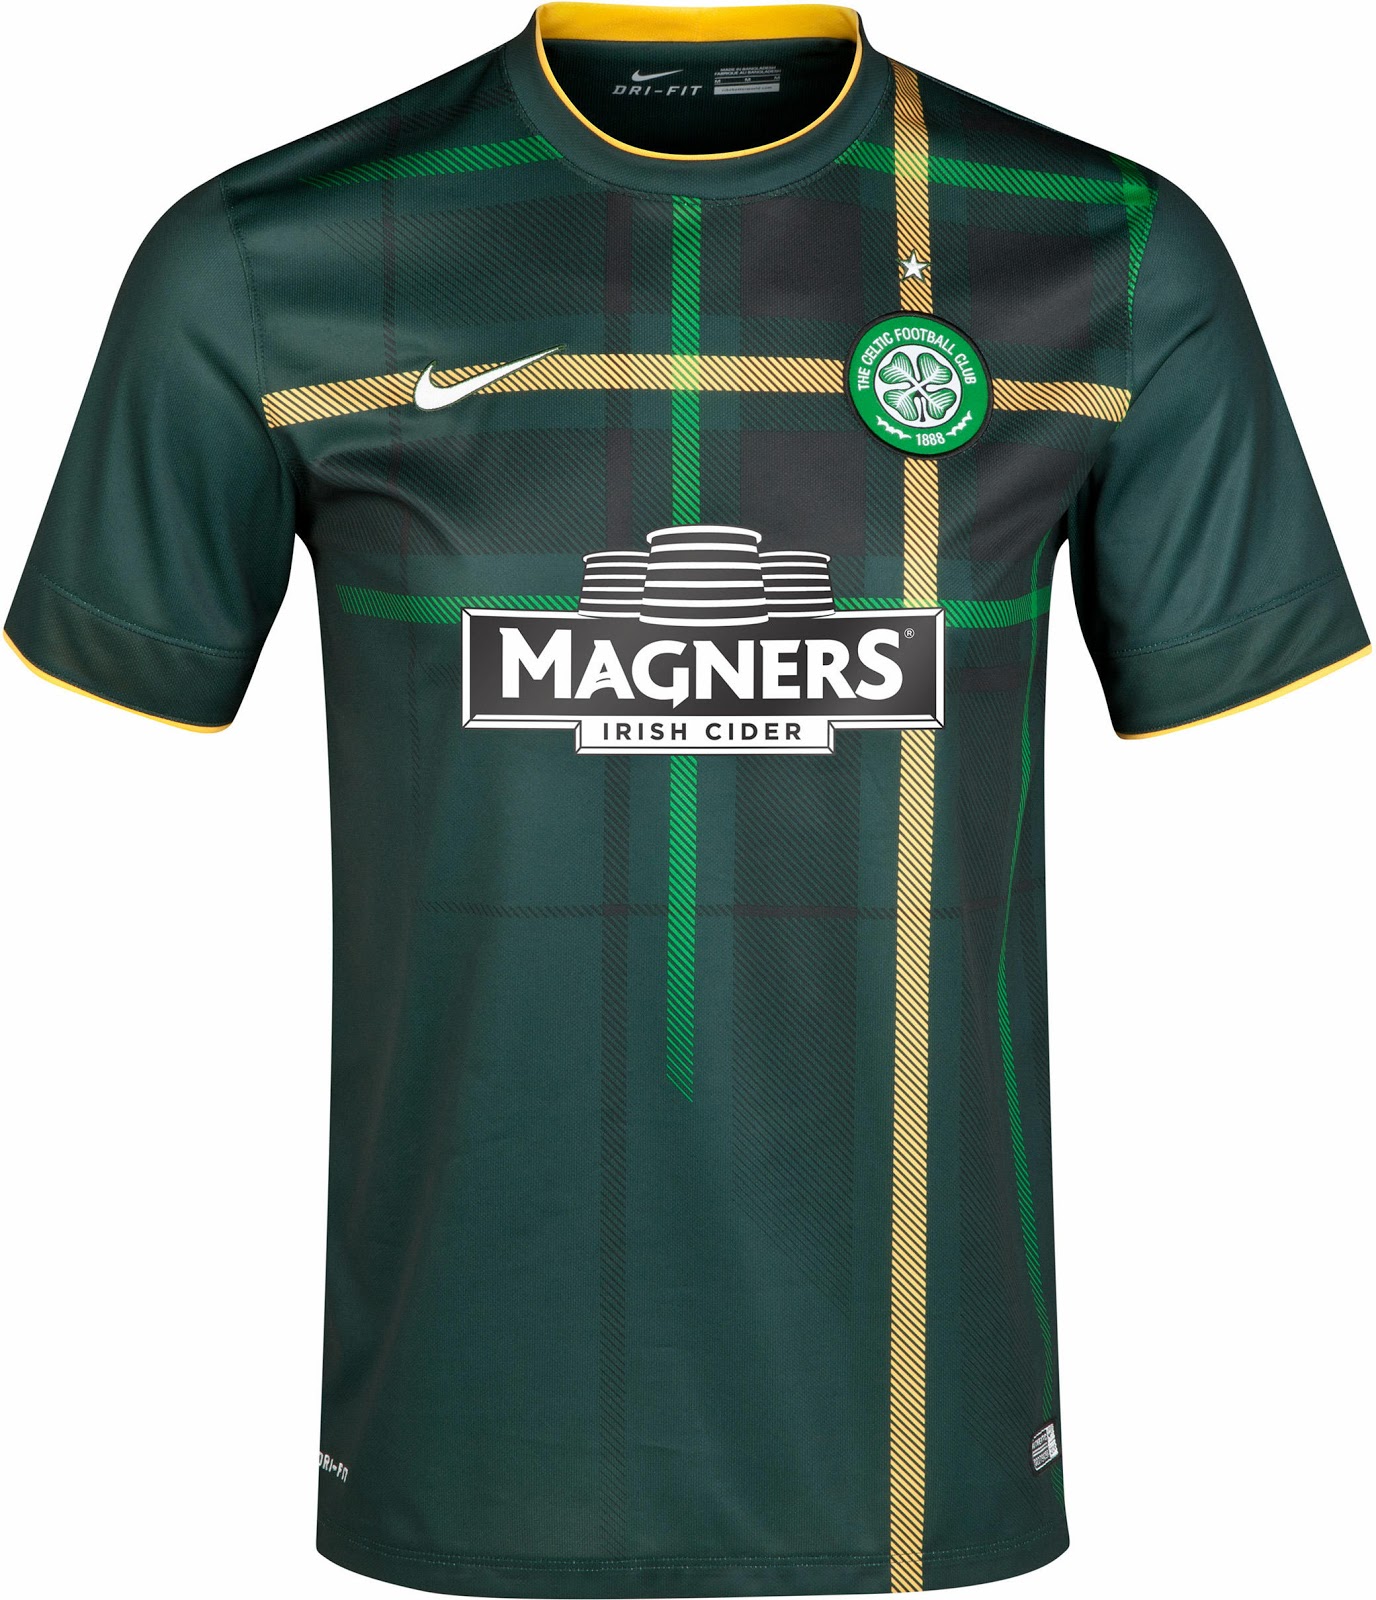 New Nike Celtic 14-15 Away and Third Kits - Footy Headlines1376 x 1600